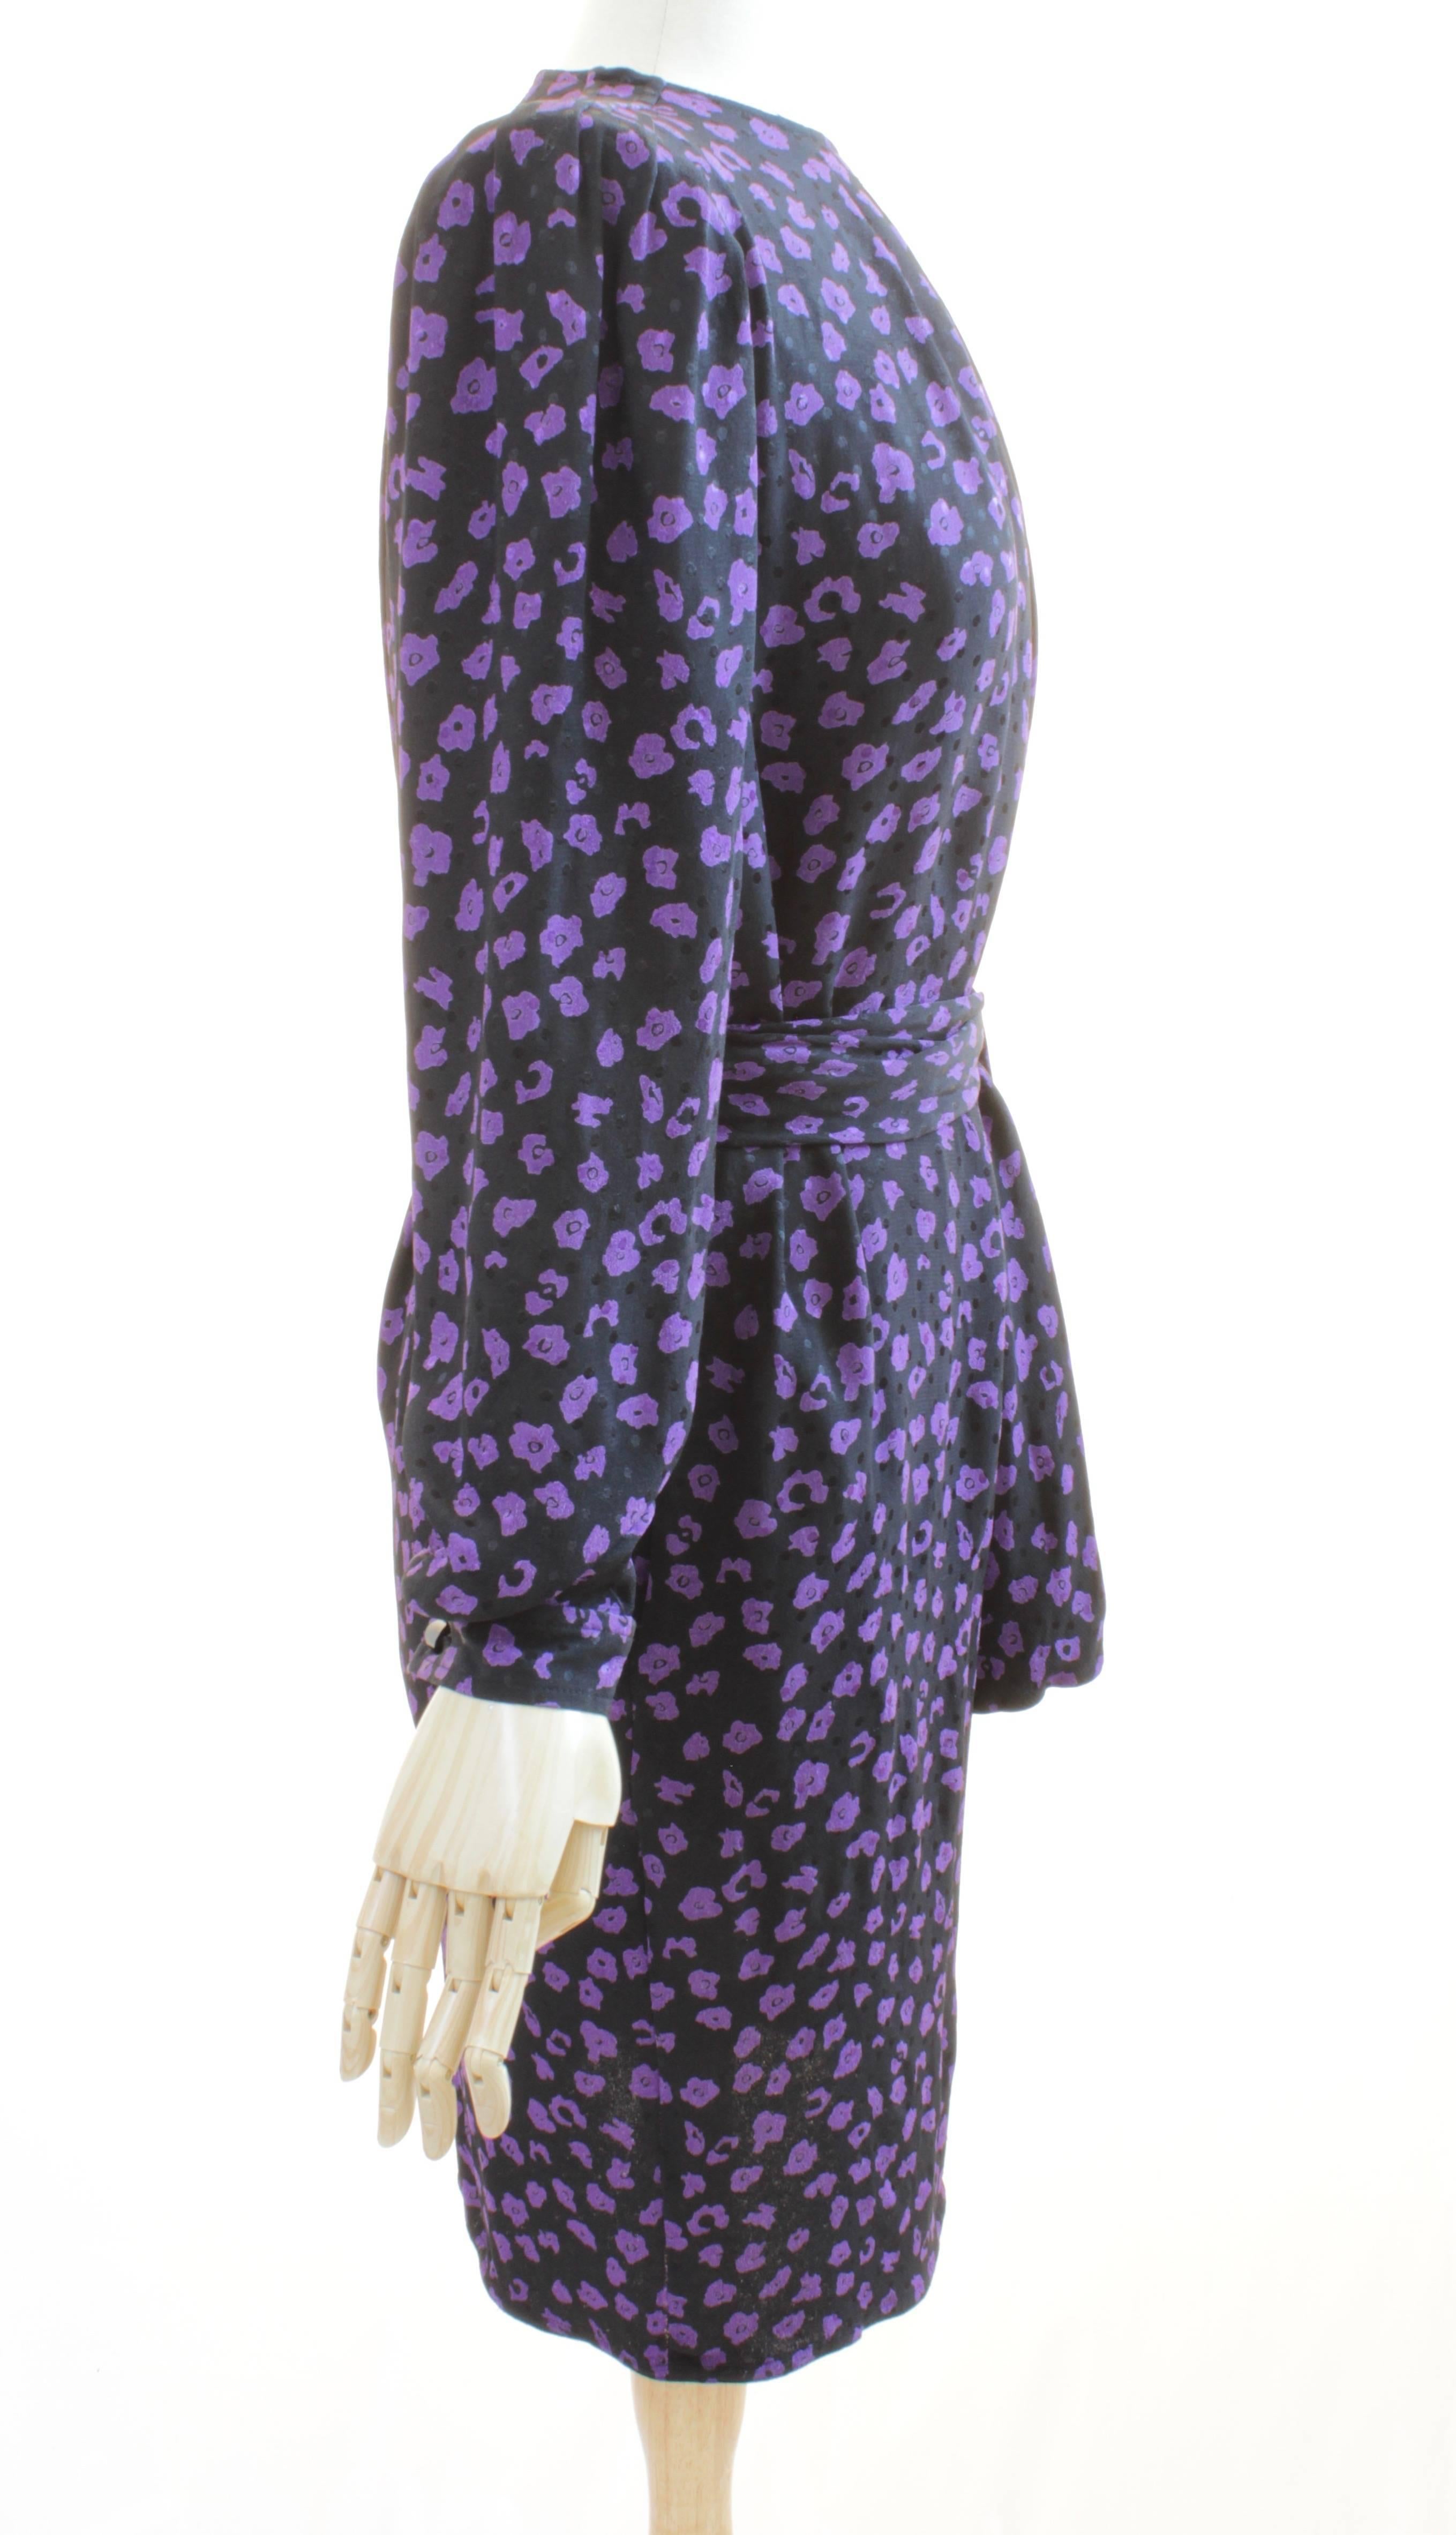 Women's Vintage Ungaro Belted Dress Silk Jacquard Purple Floral on Black Size 10